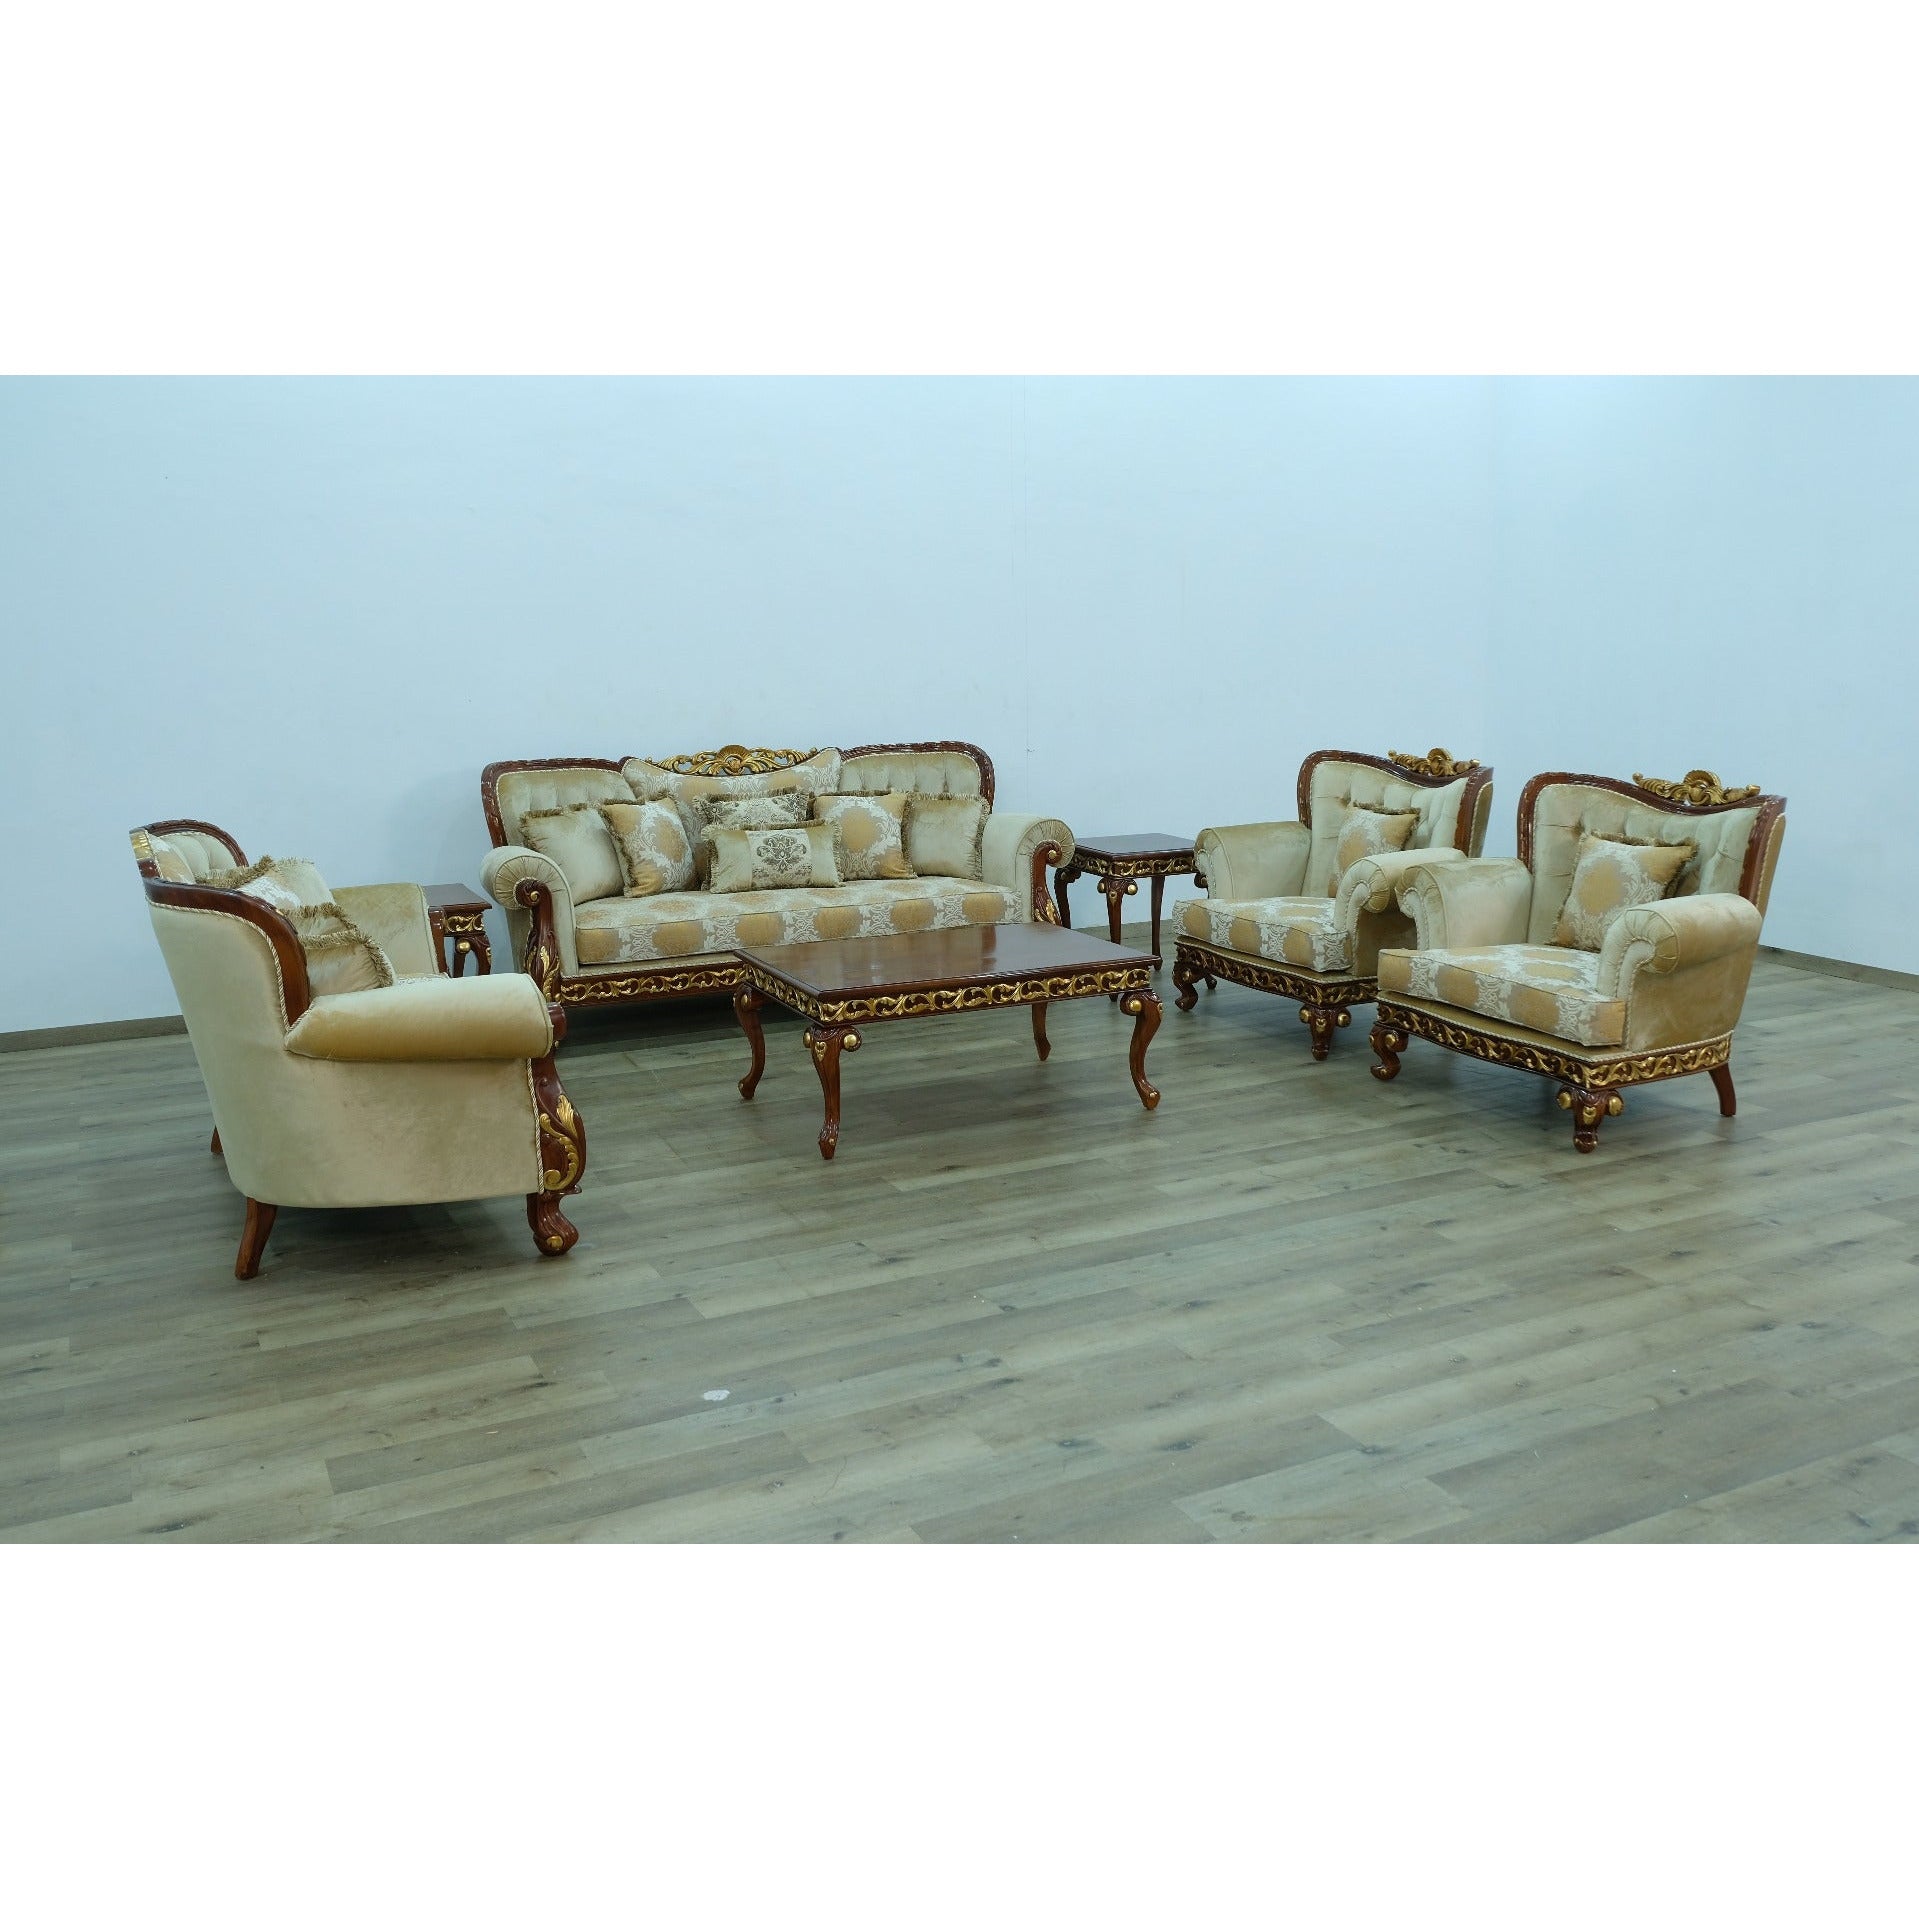 European Furniture - Fantasia II Sofa in Gold-Brown - 40019-S - New Star Living